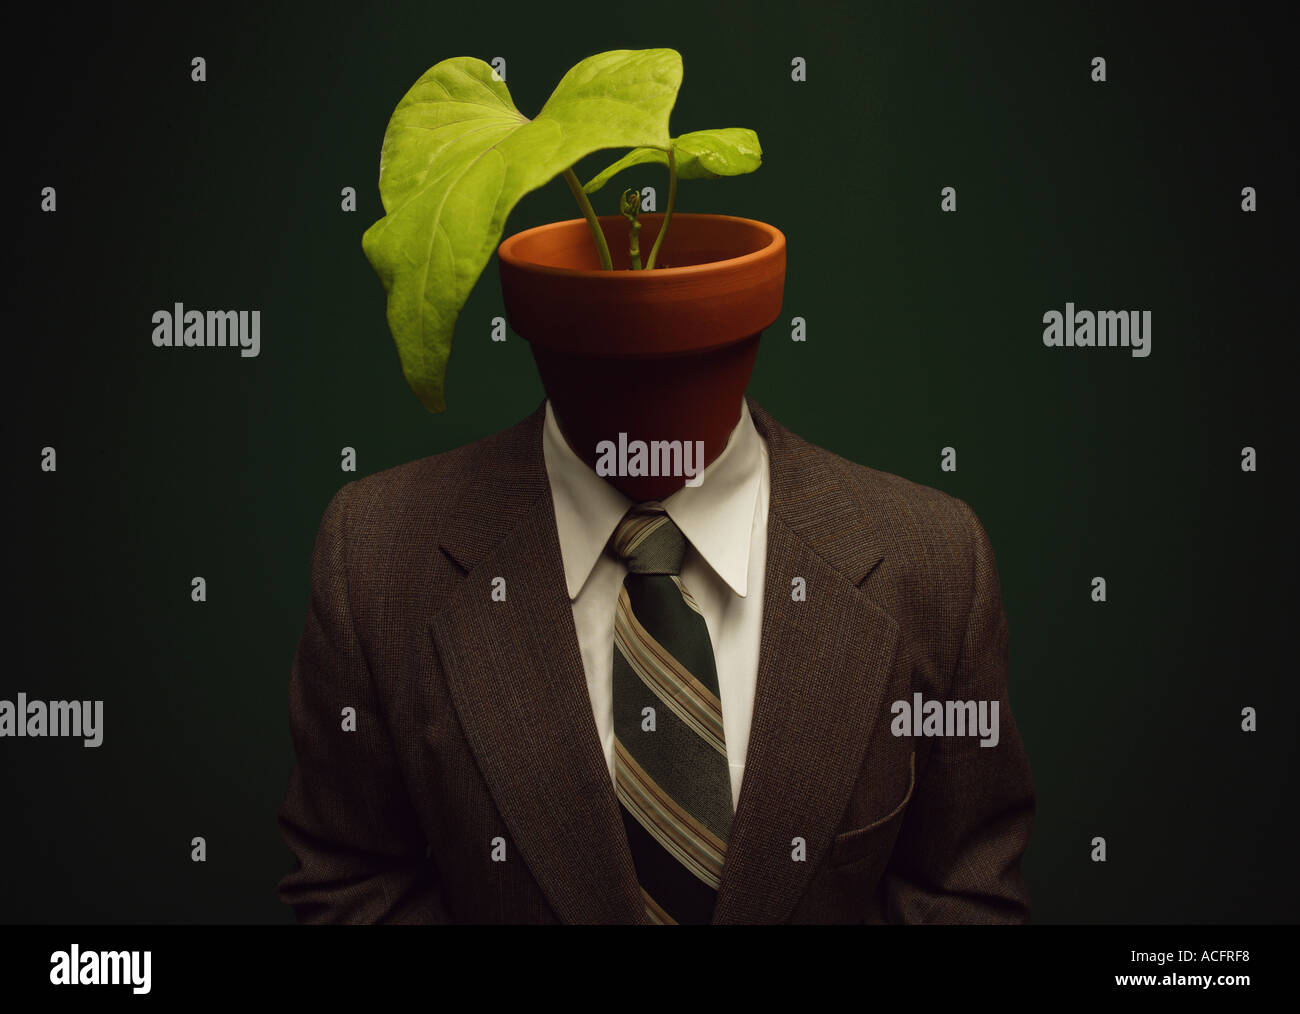 Plant on head of human body Stock Photo - Alamy